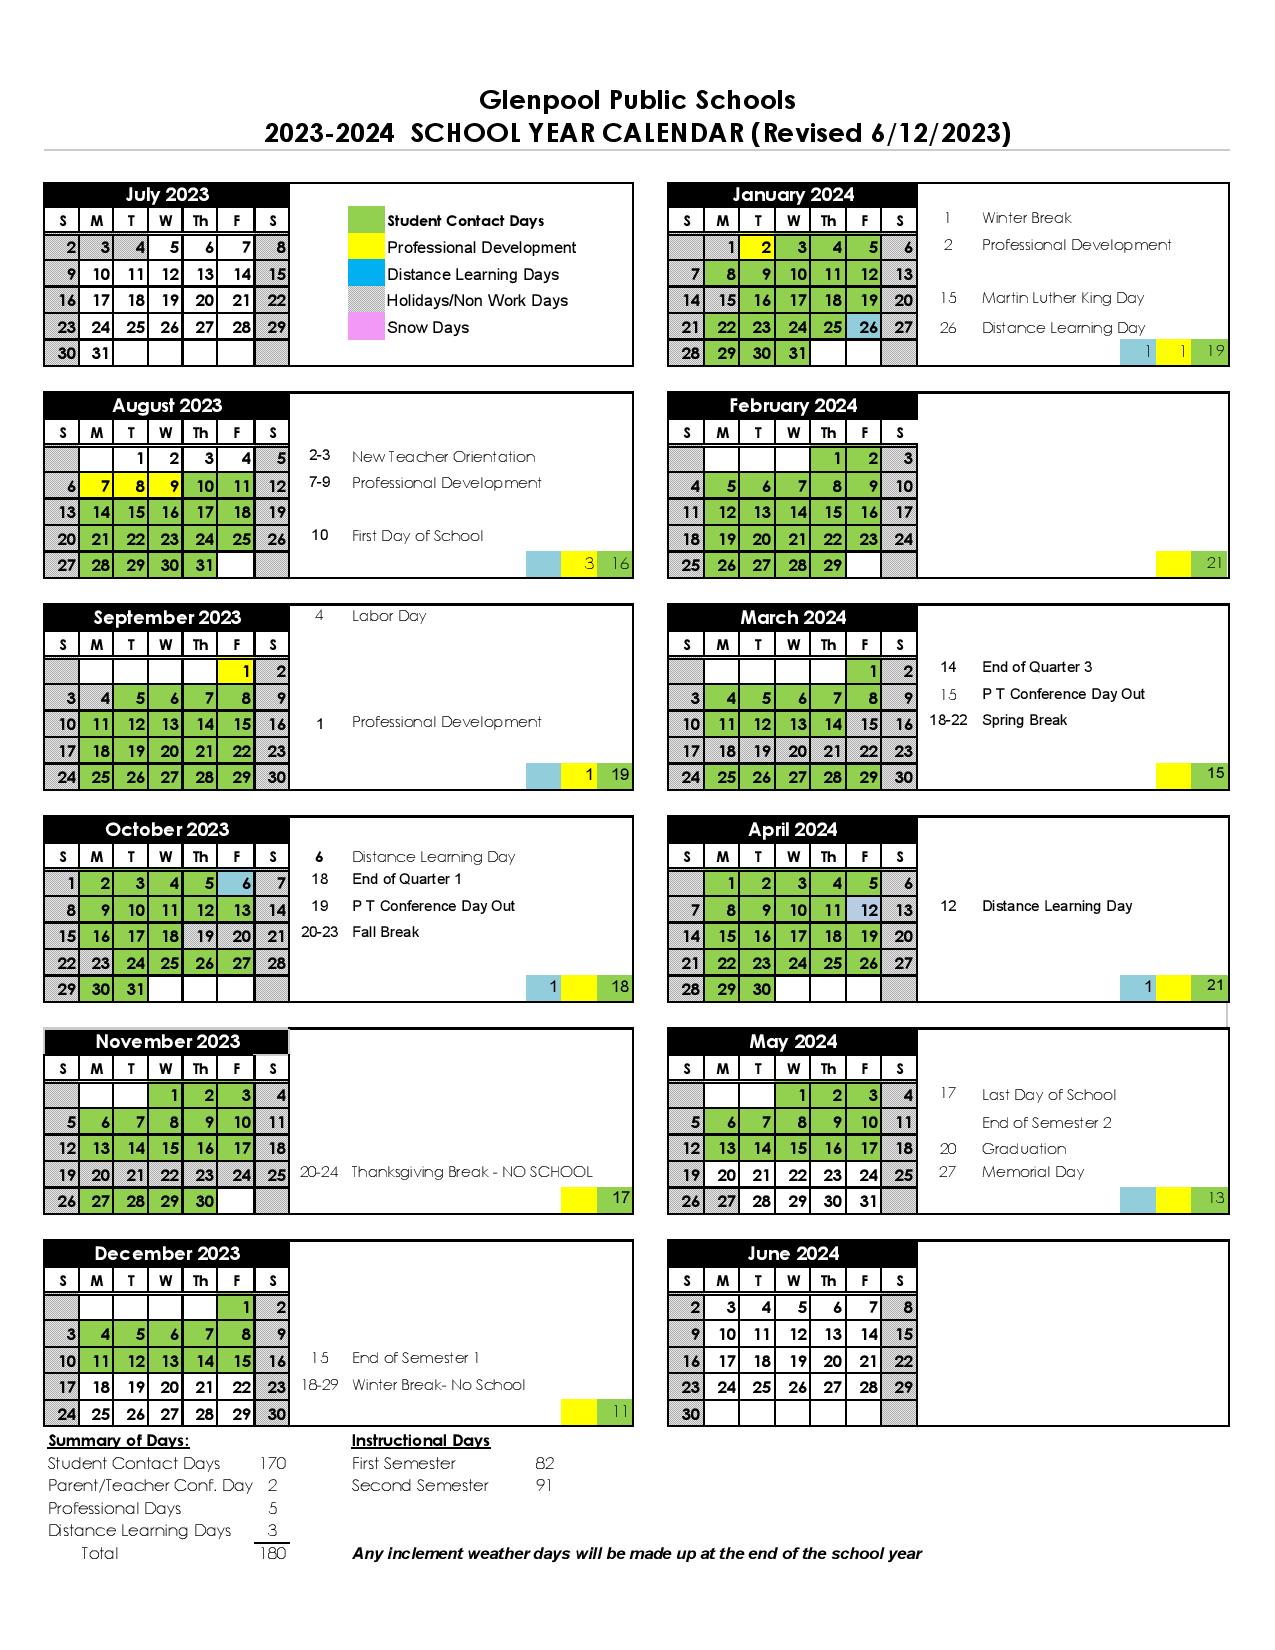 Glenpool Public Schools Calendar 20232024 in PDF